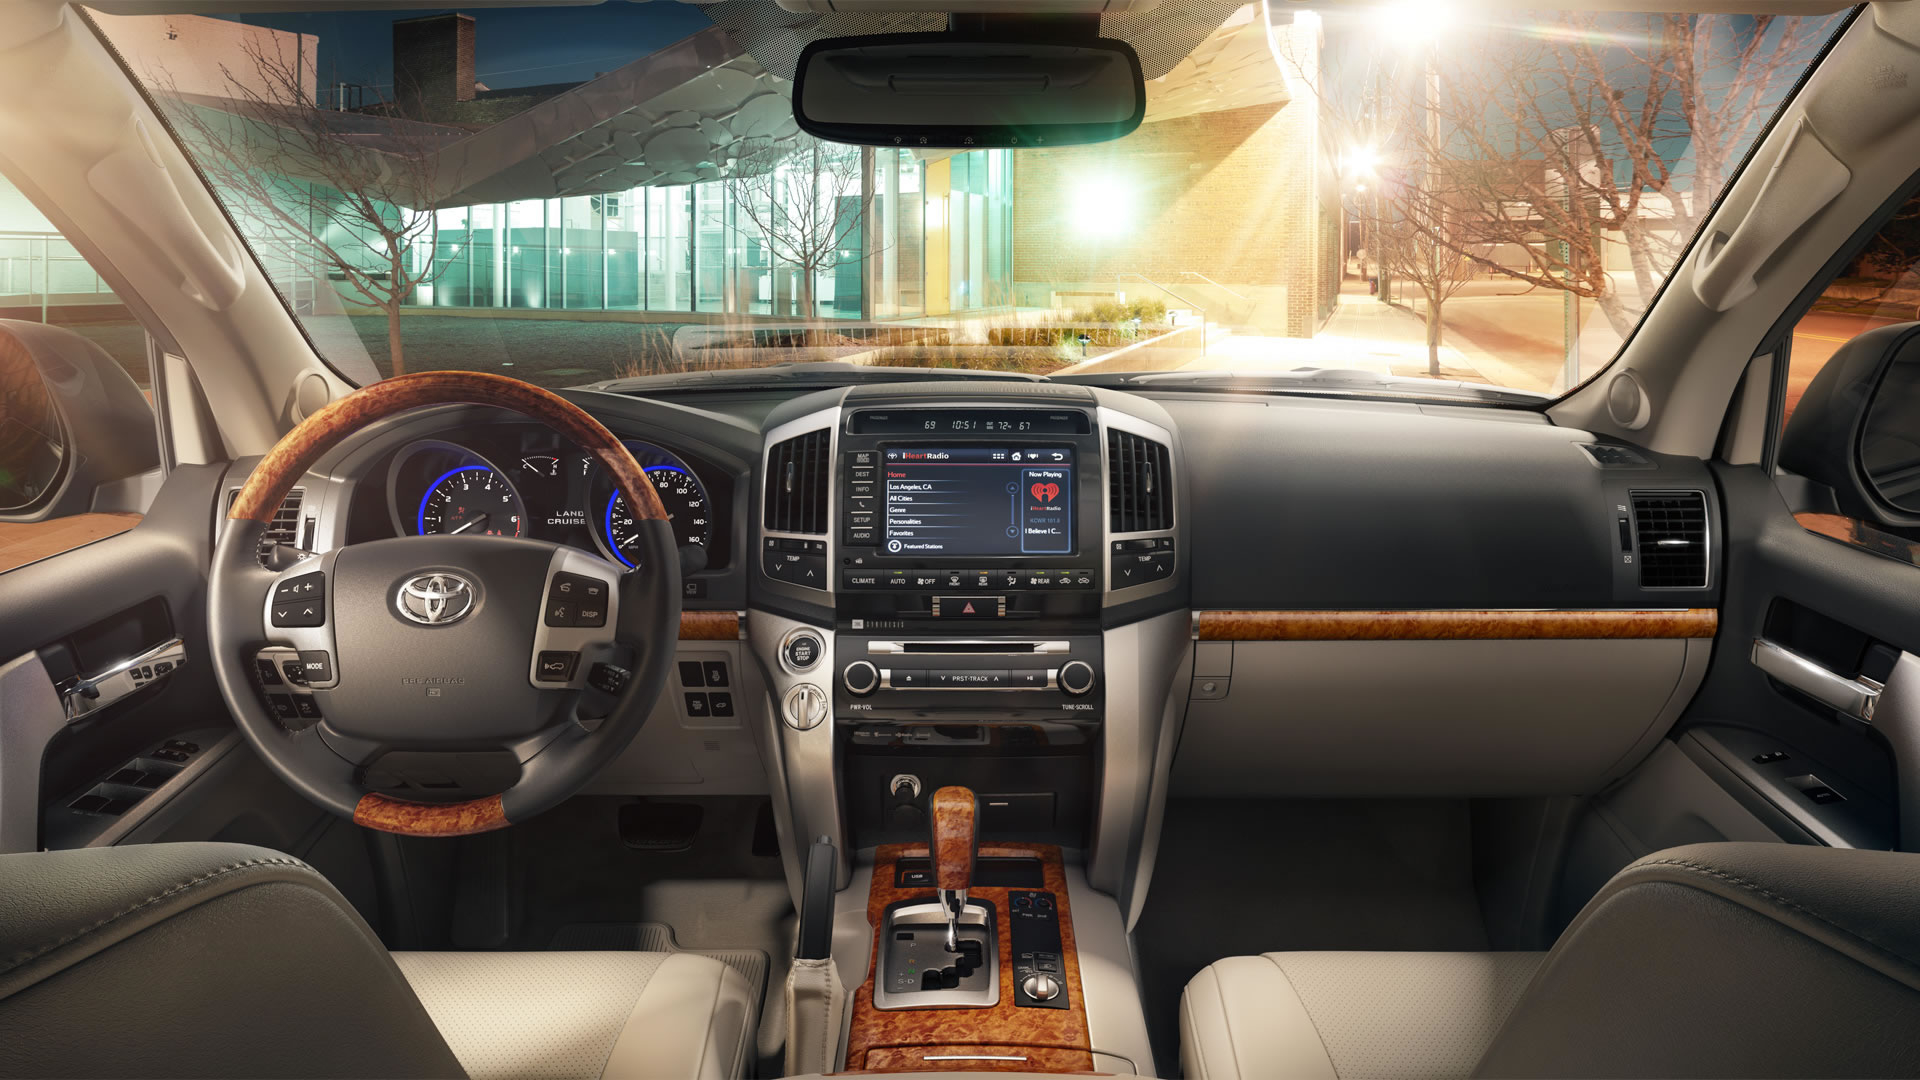 Toyota Land Cruiser 200 Interior